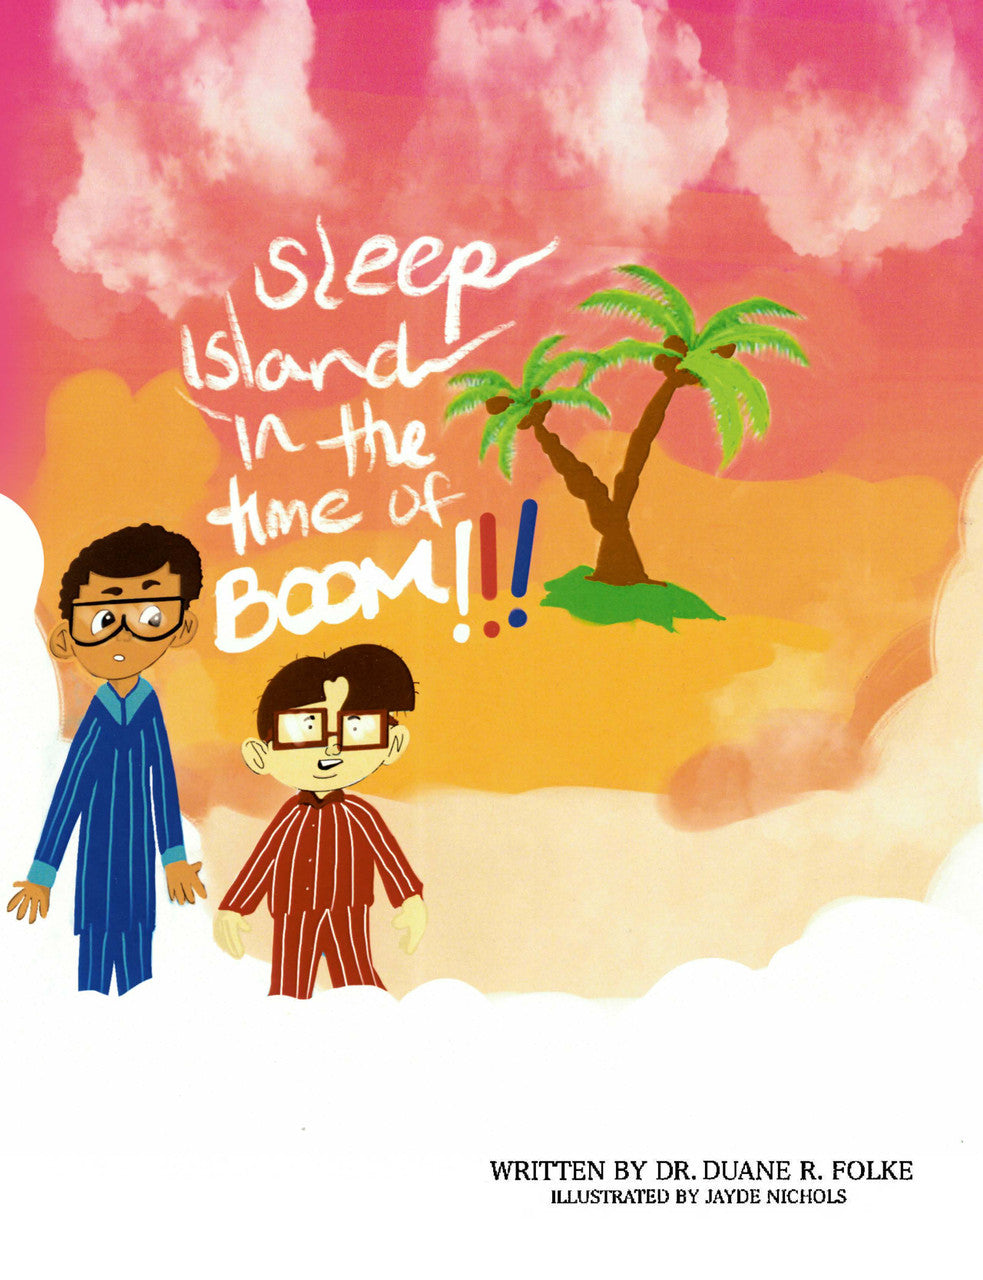 Sleep Island In The Time Of Boom!!!